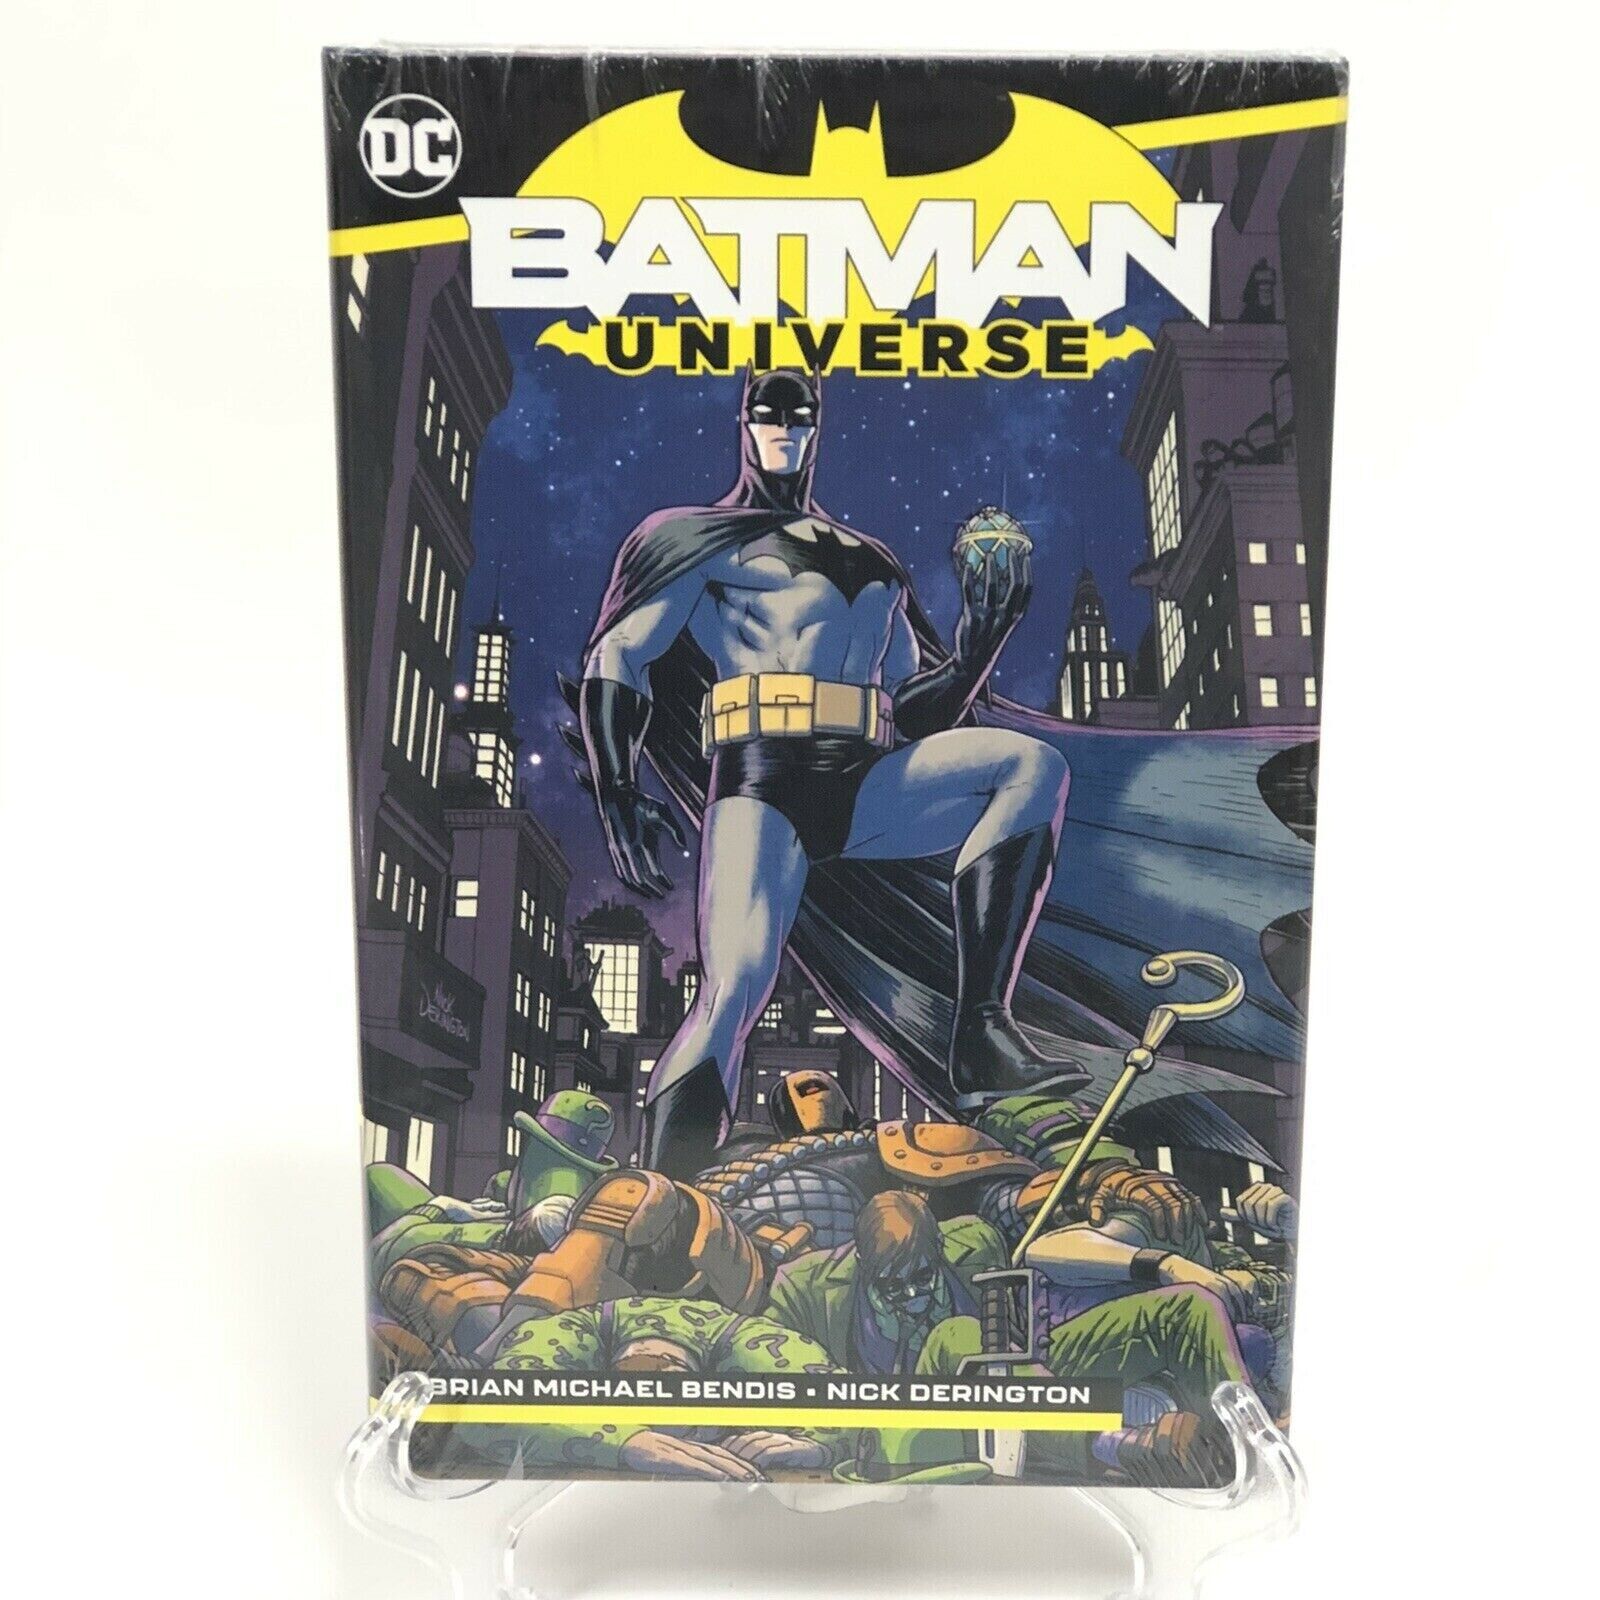 Batman Universe New DC Comics HC Hardcover Sealed Brian Michael Bendis